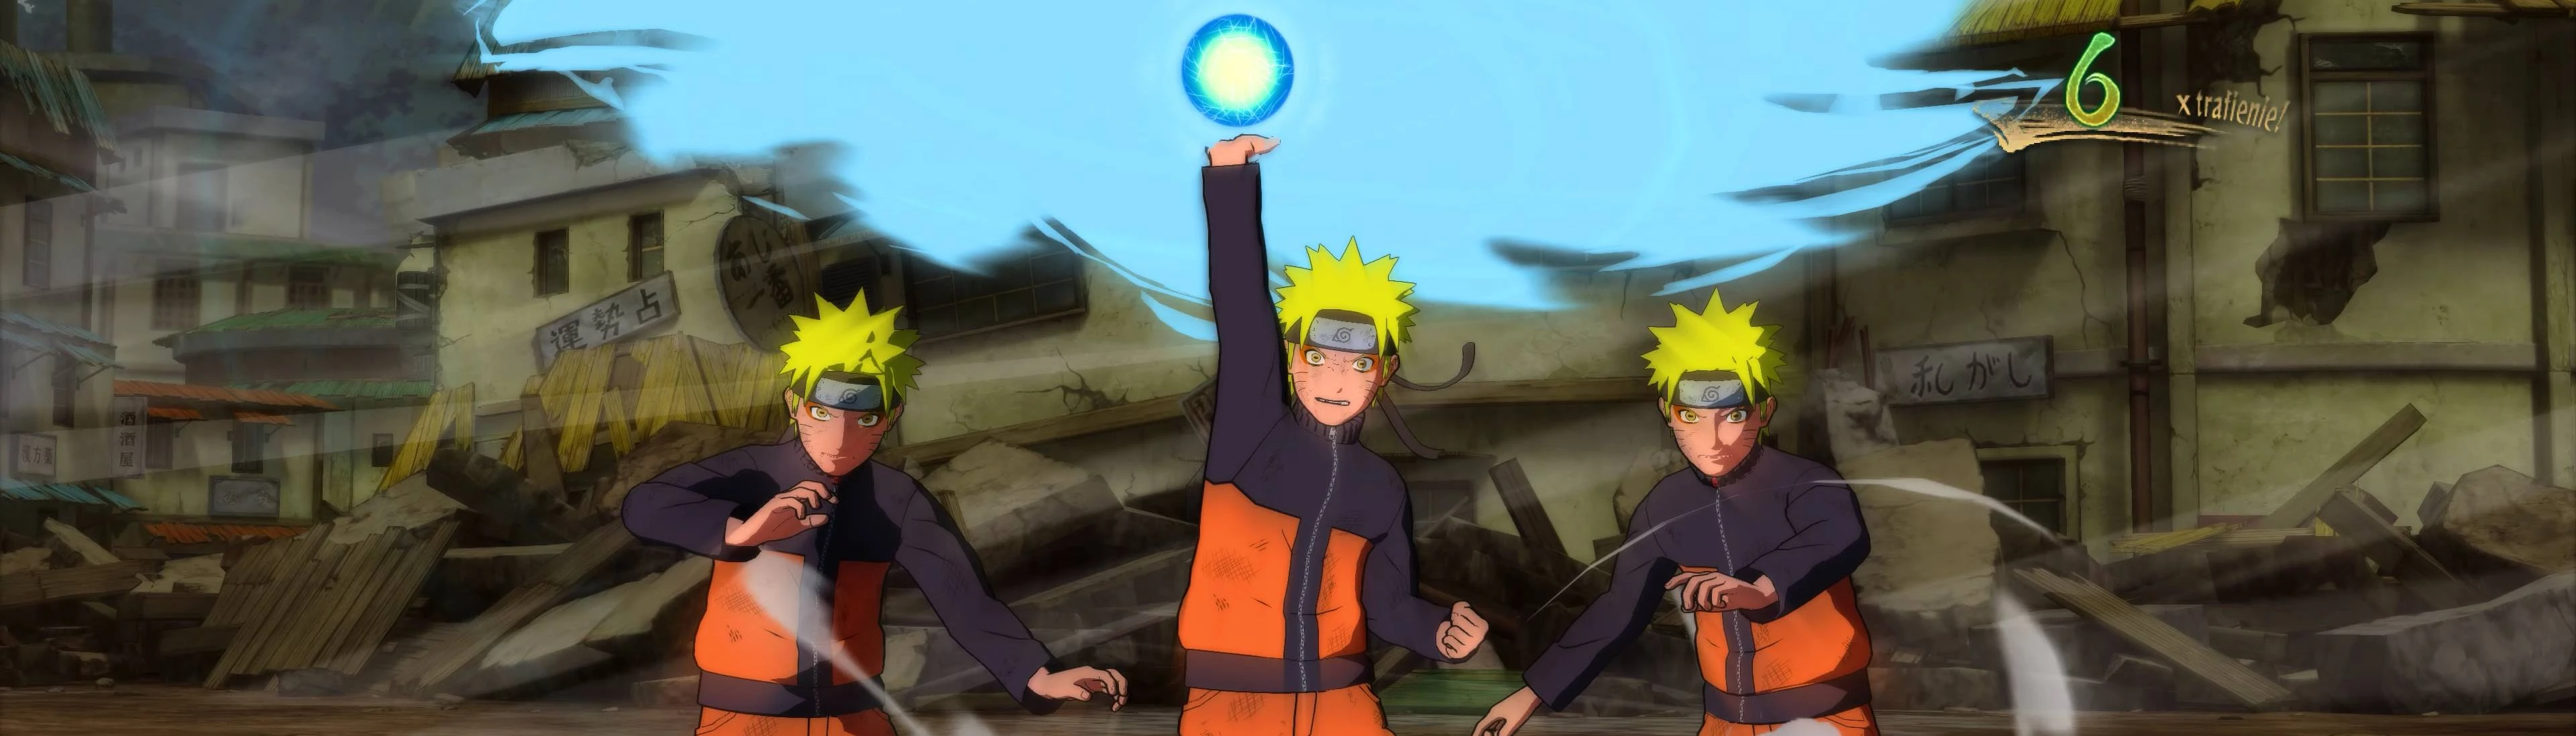 Naruto Shippuden: Ultimate Ninja Storm 4 Nexus - Mods and Community